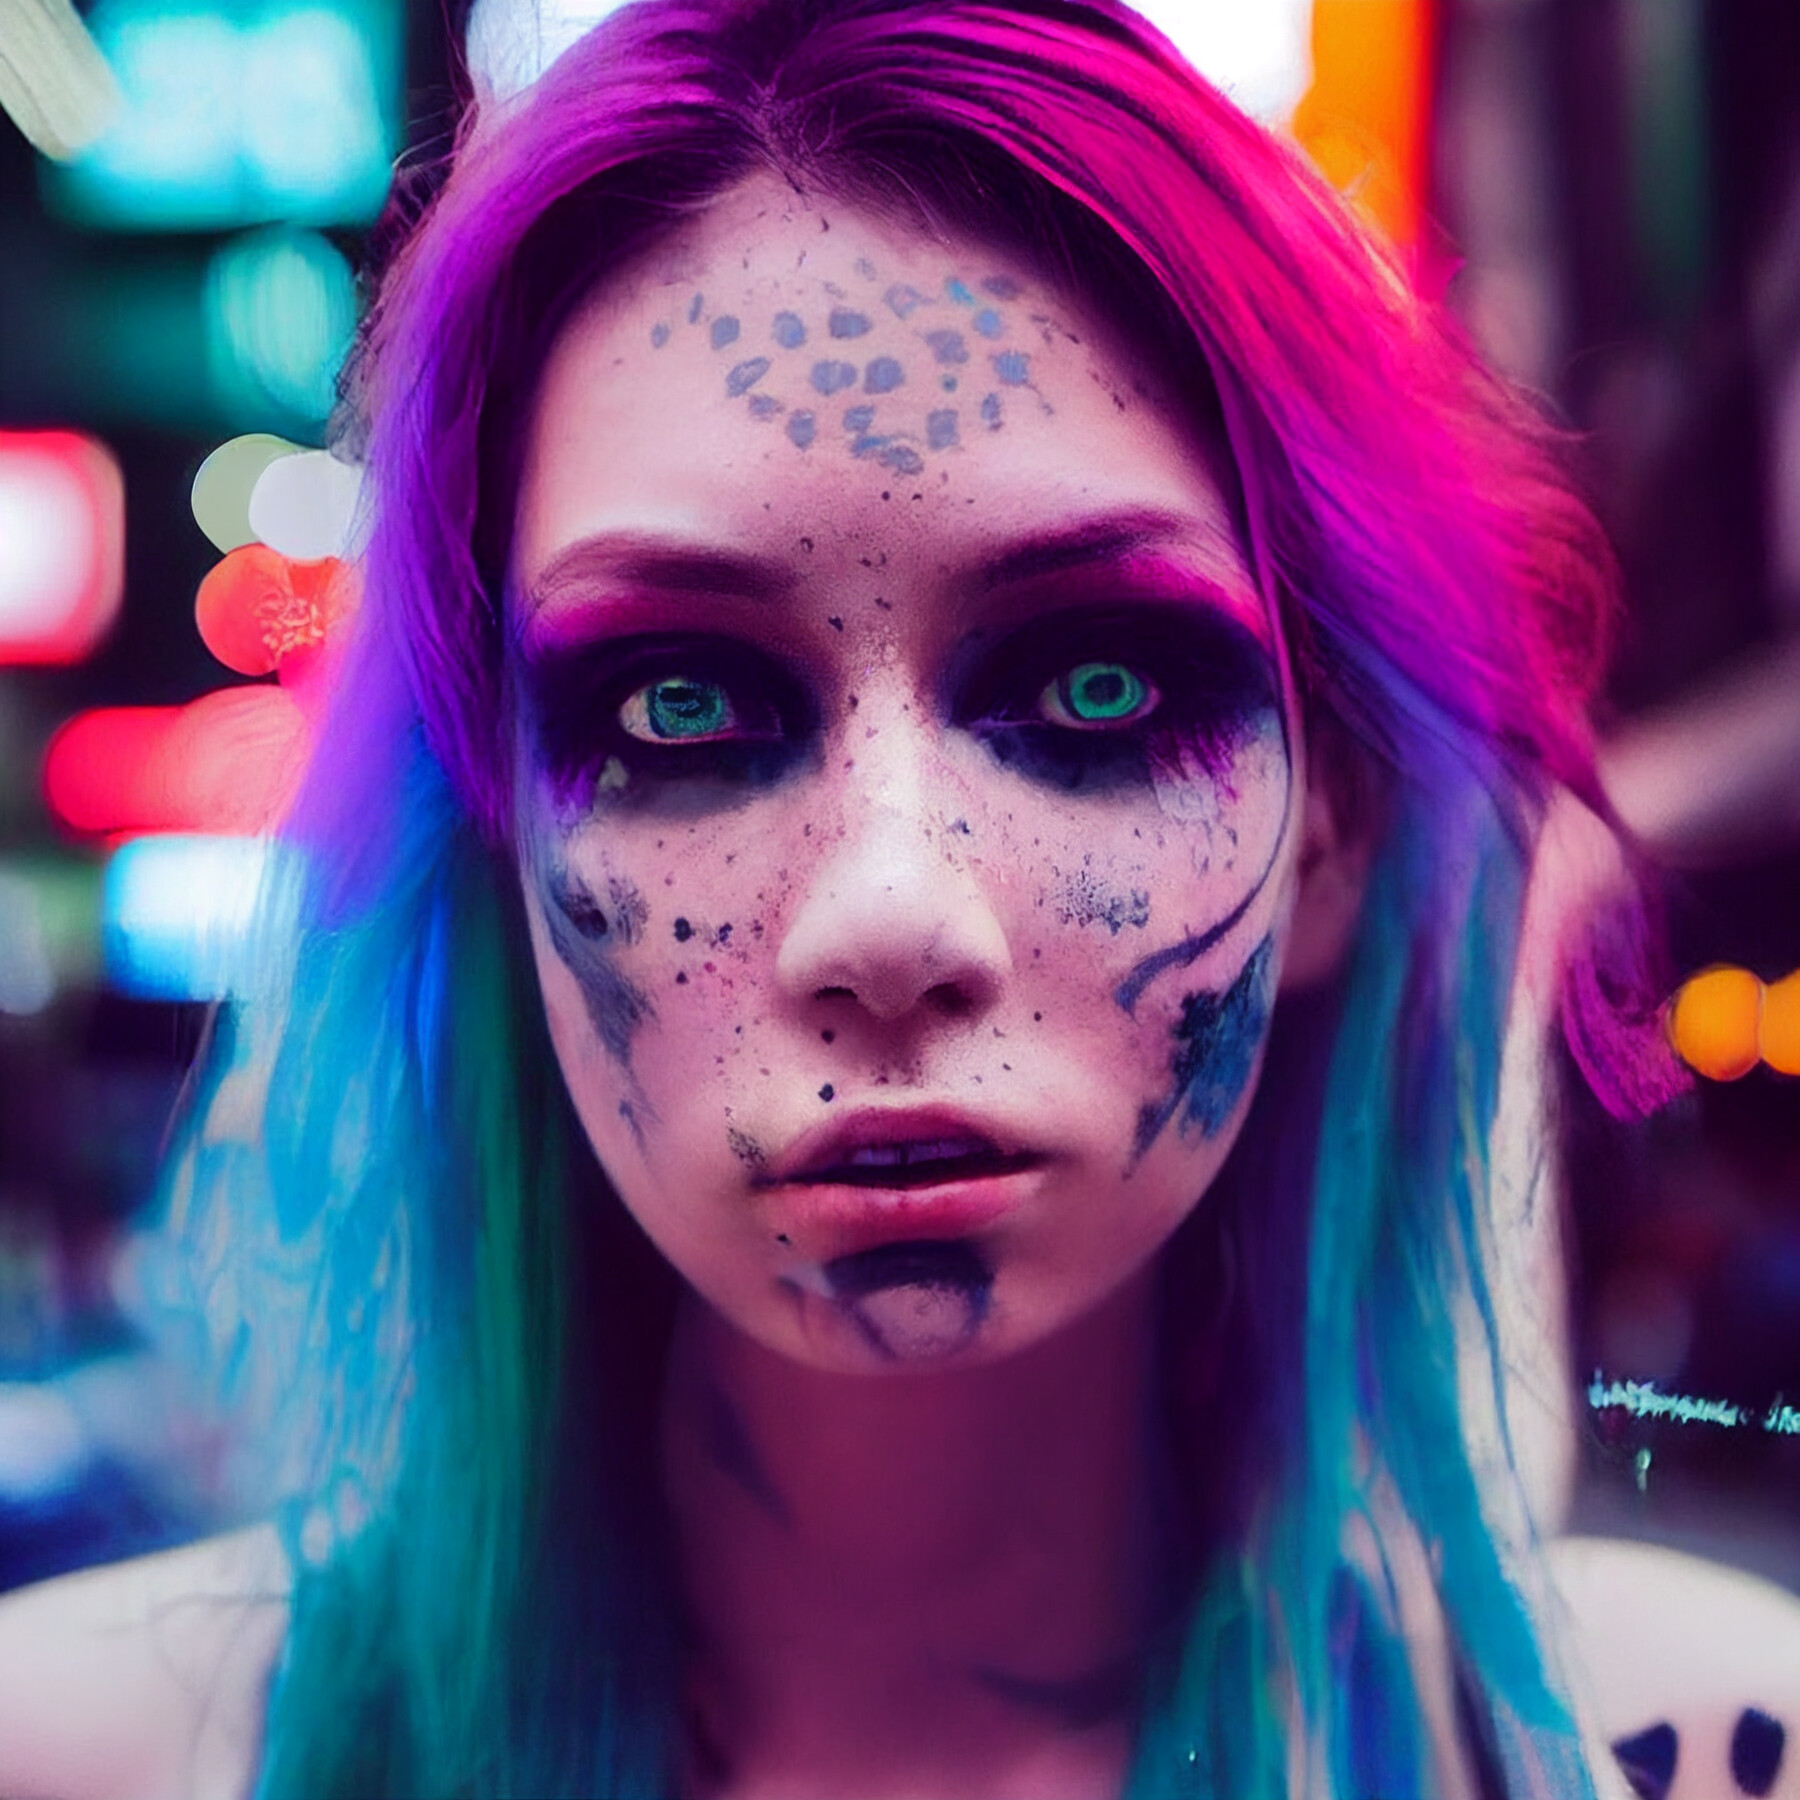 ArtStation - Cyberpunk girl blue eyes. | Artworks